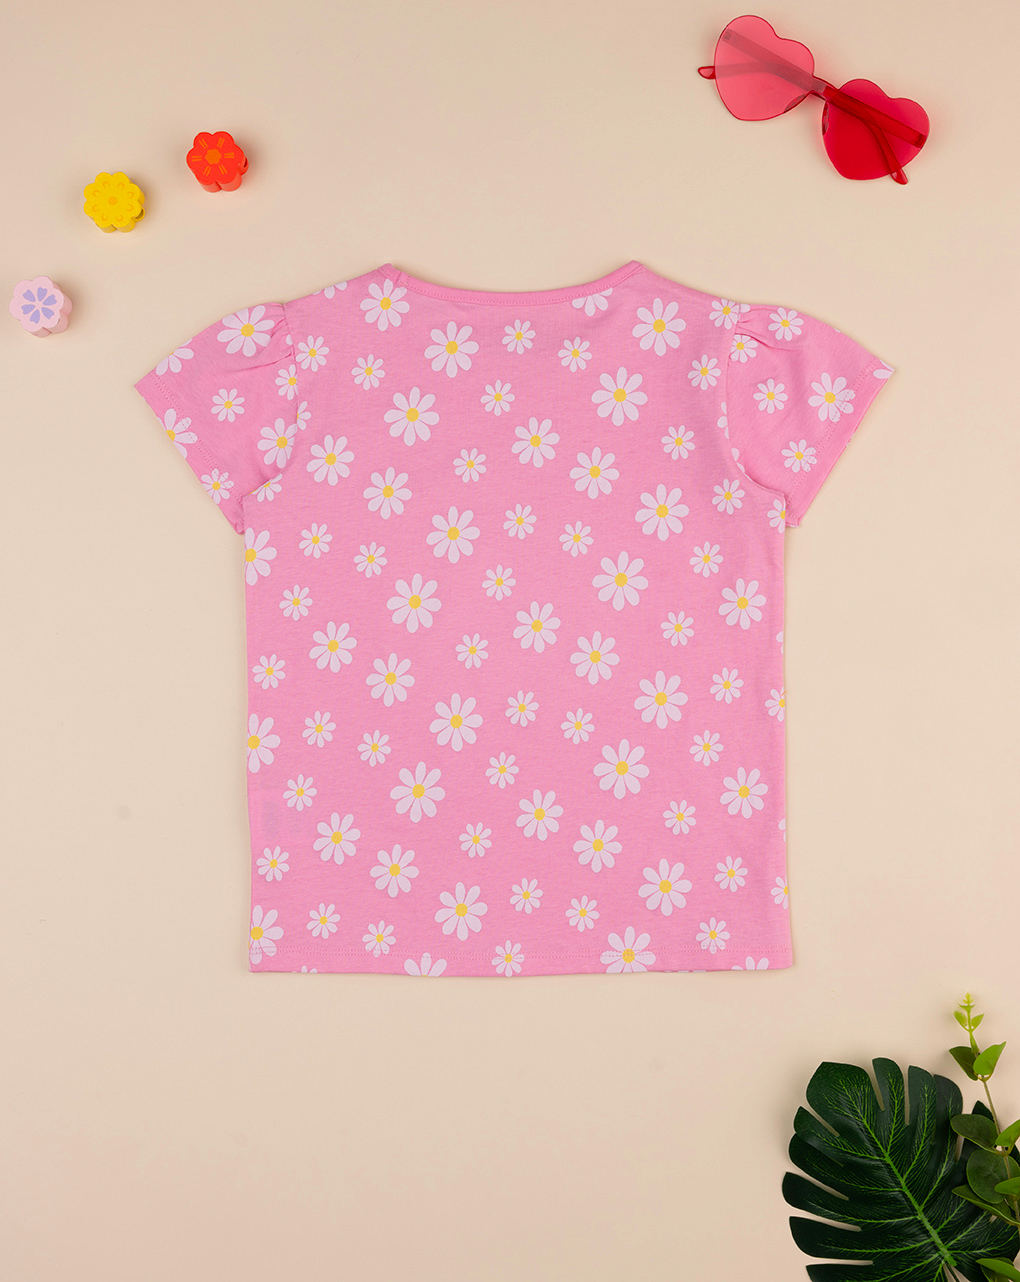 Camiseta rosa estampada de niña - Prénatal